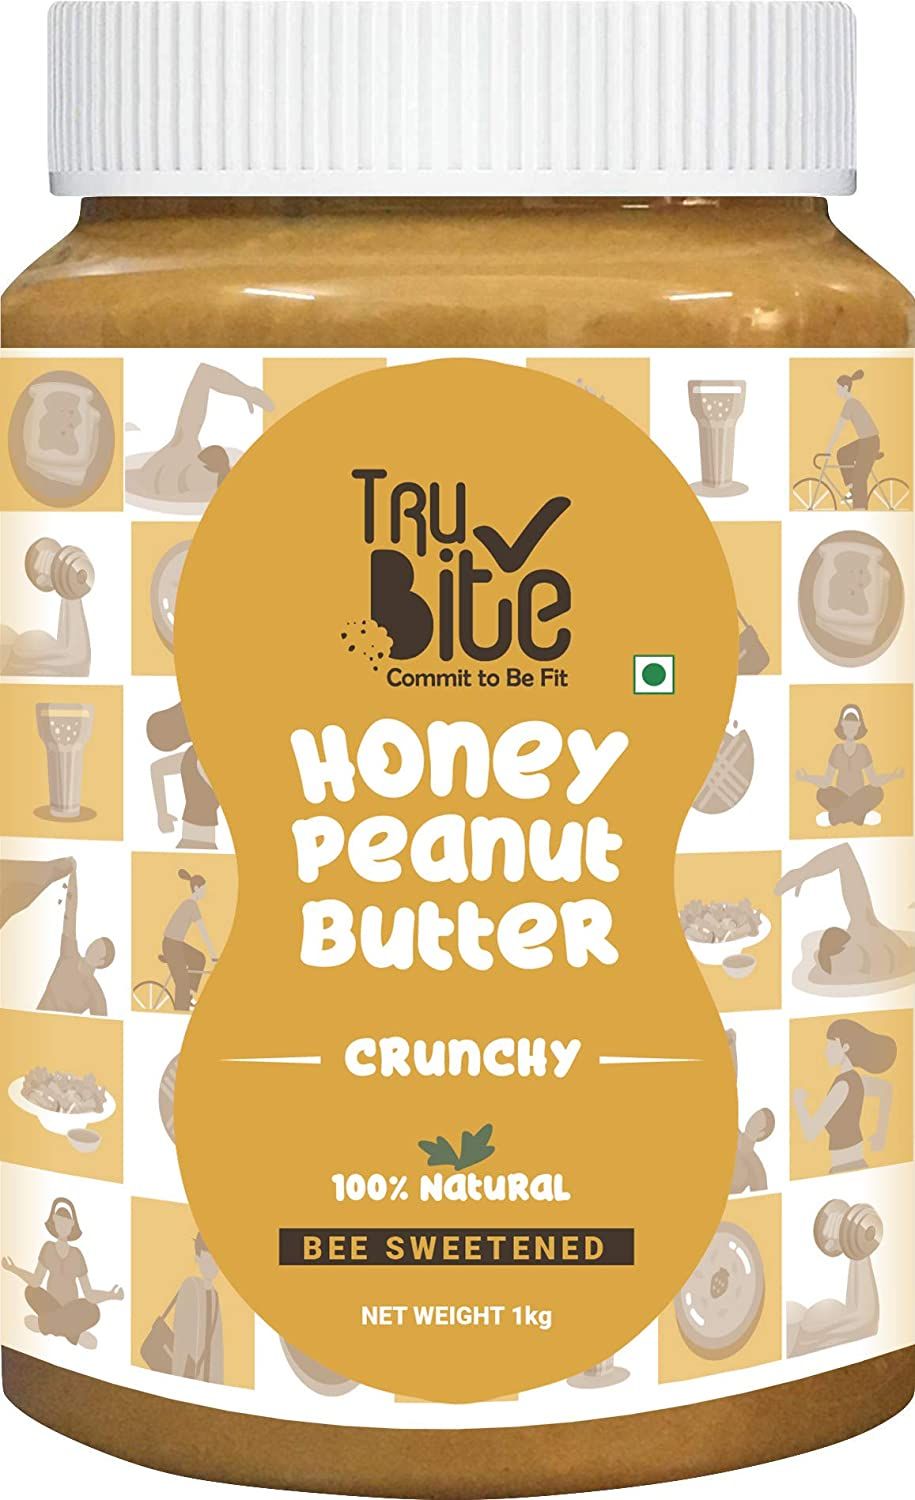 Trubite Honey Peanut Butter Crunchy Image